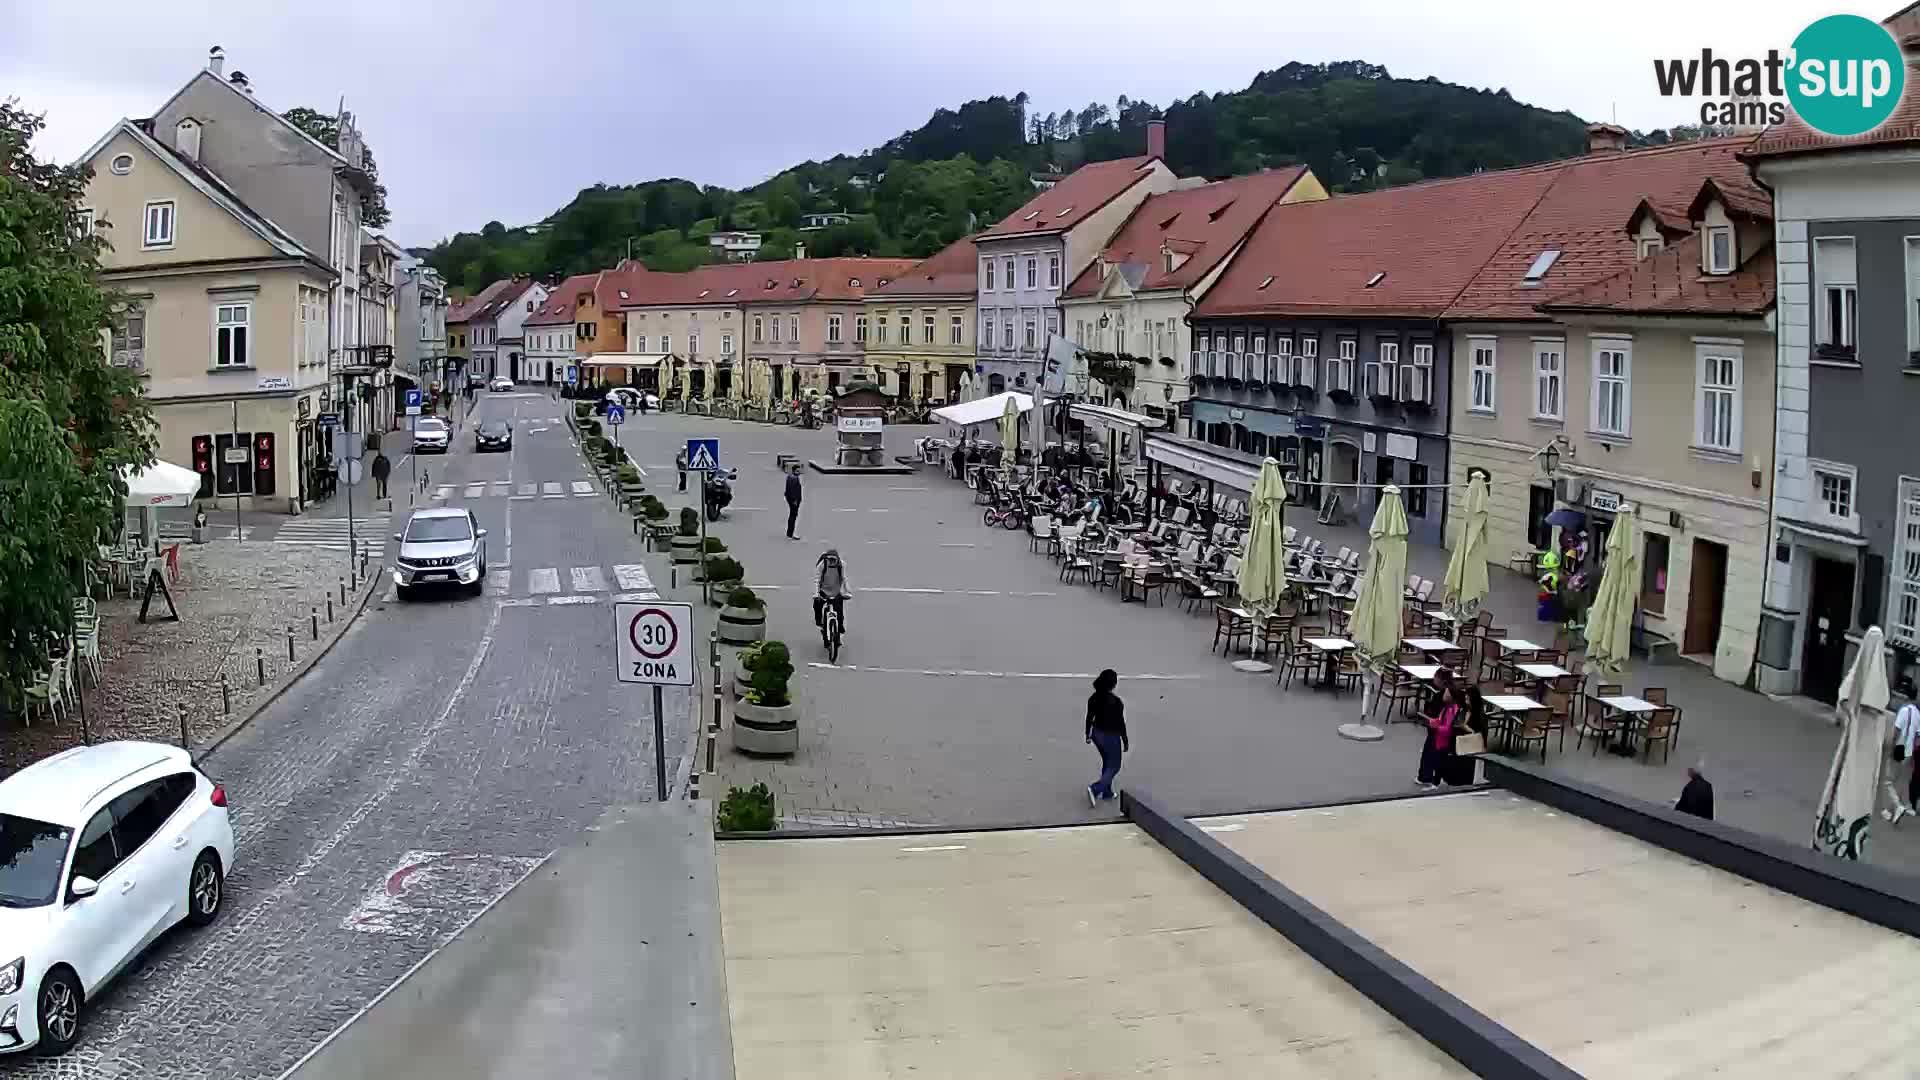 Samobor – Piazza centrale dedicata a re Tomislav